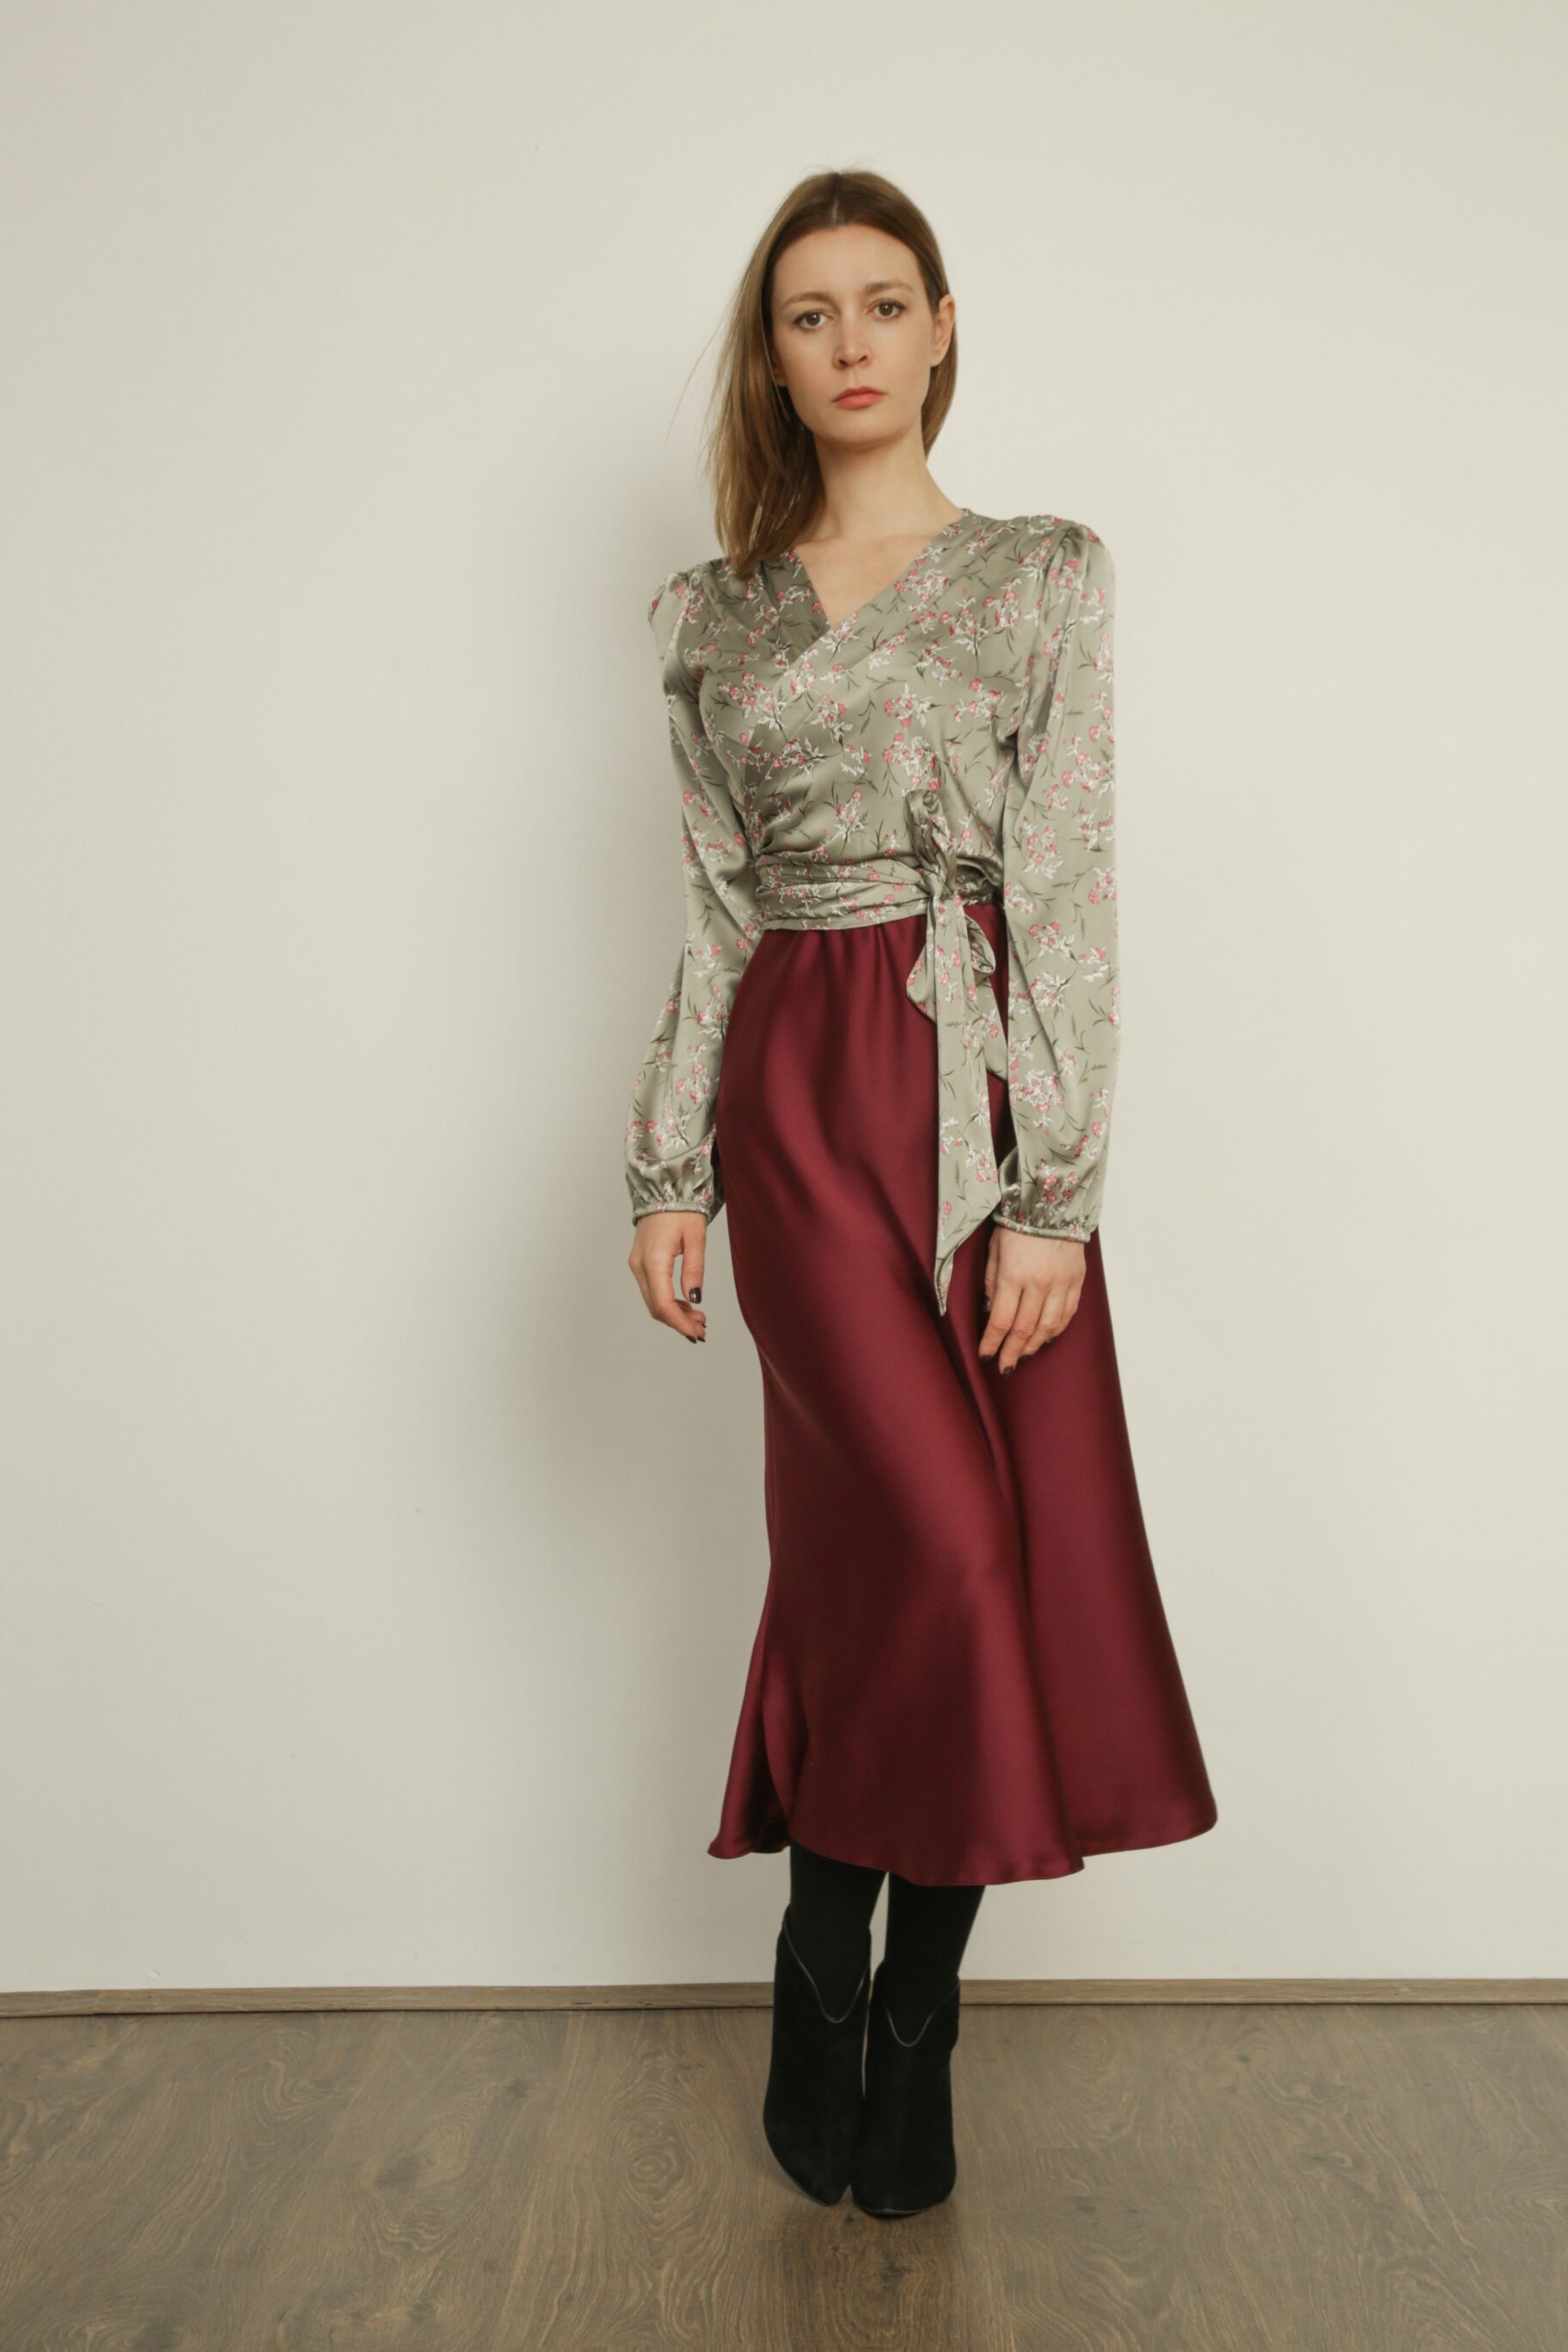 Satin Floral Blouse & Simple Burgundy Midi Skirt